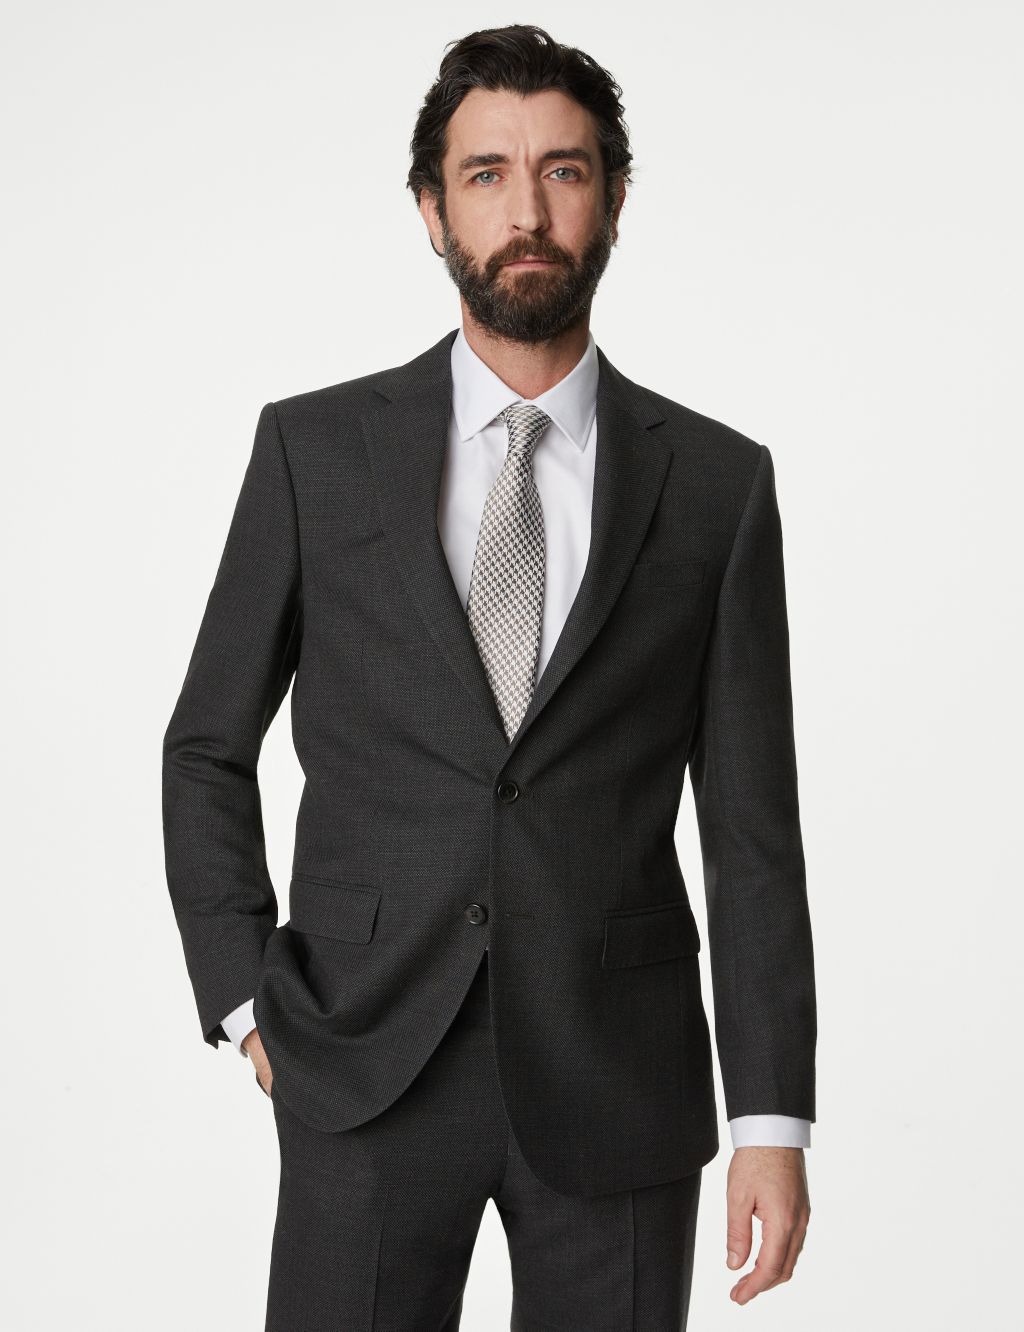 Three Piece Grey Suit for men